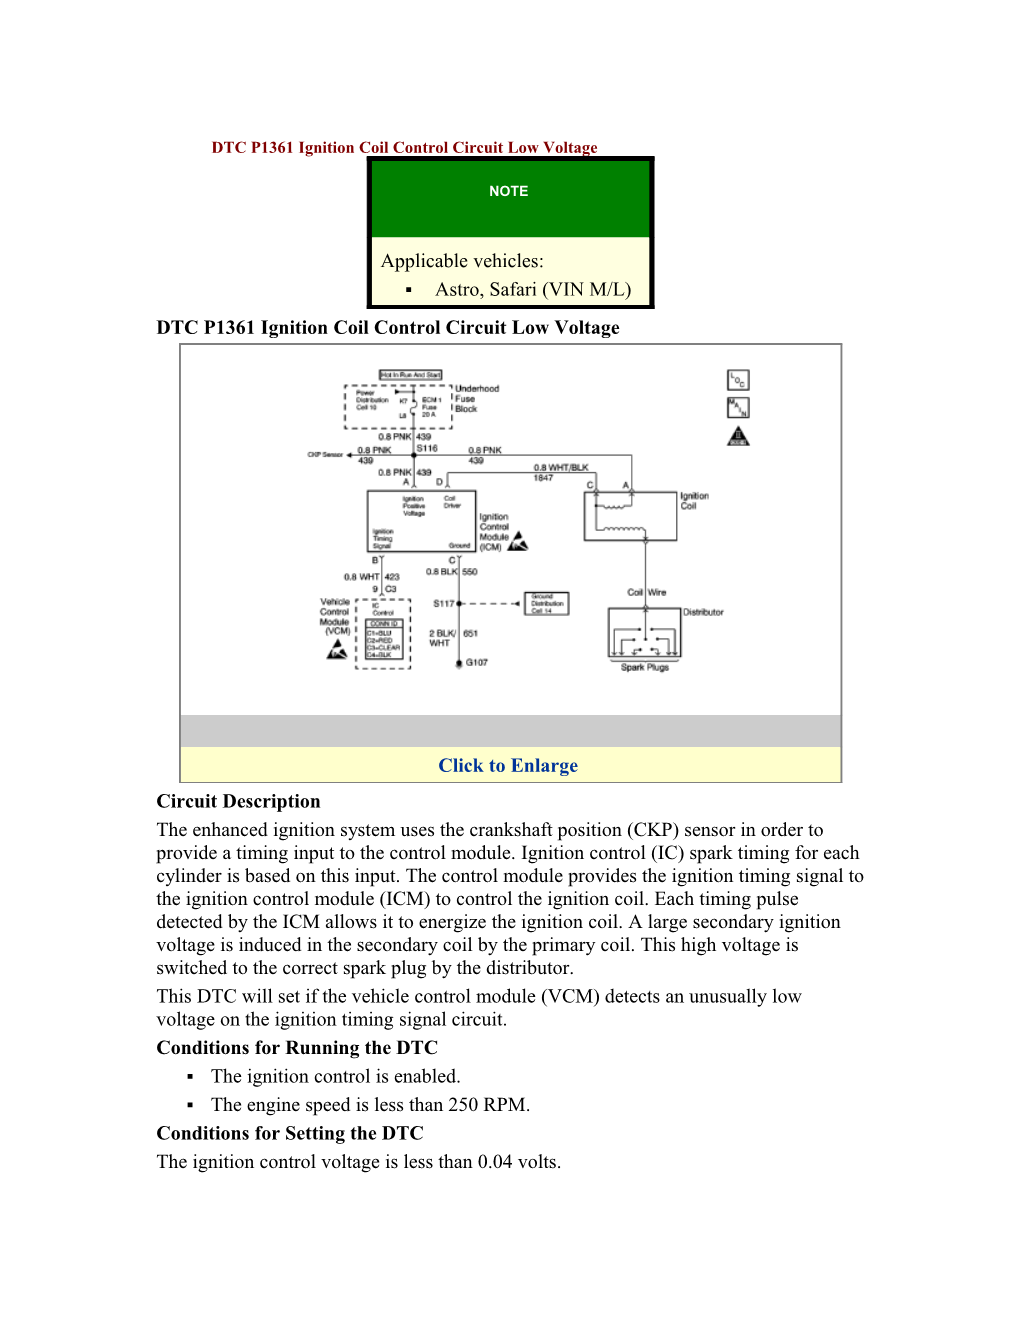 DTC P1361 Ignition Coil Control Circuit Low Voltage